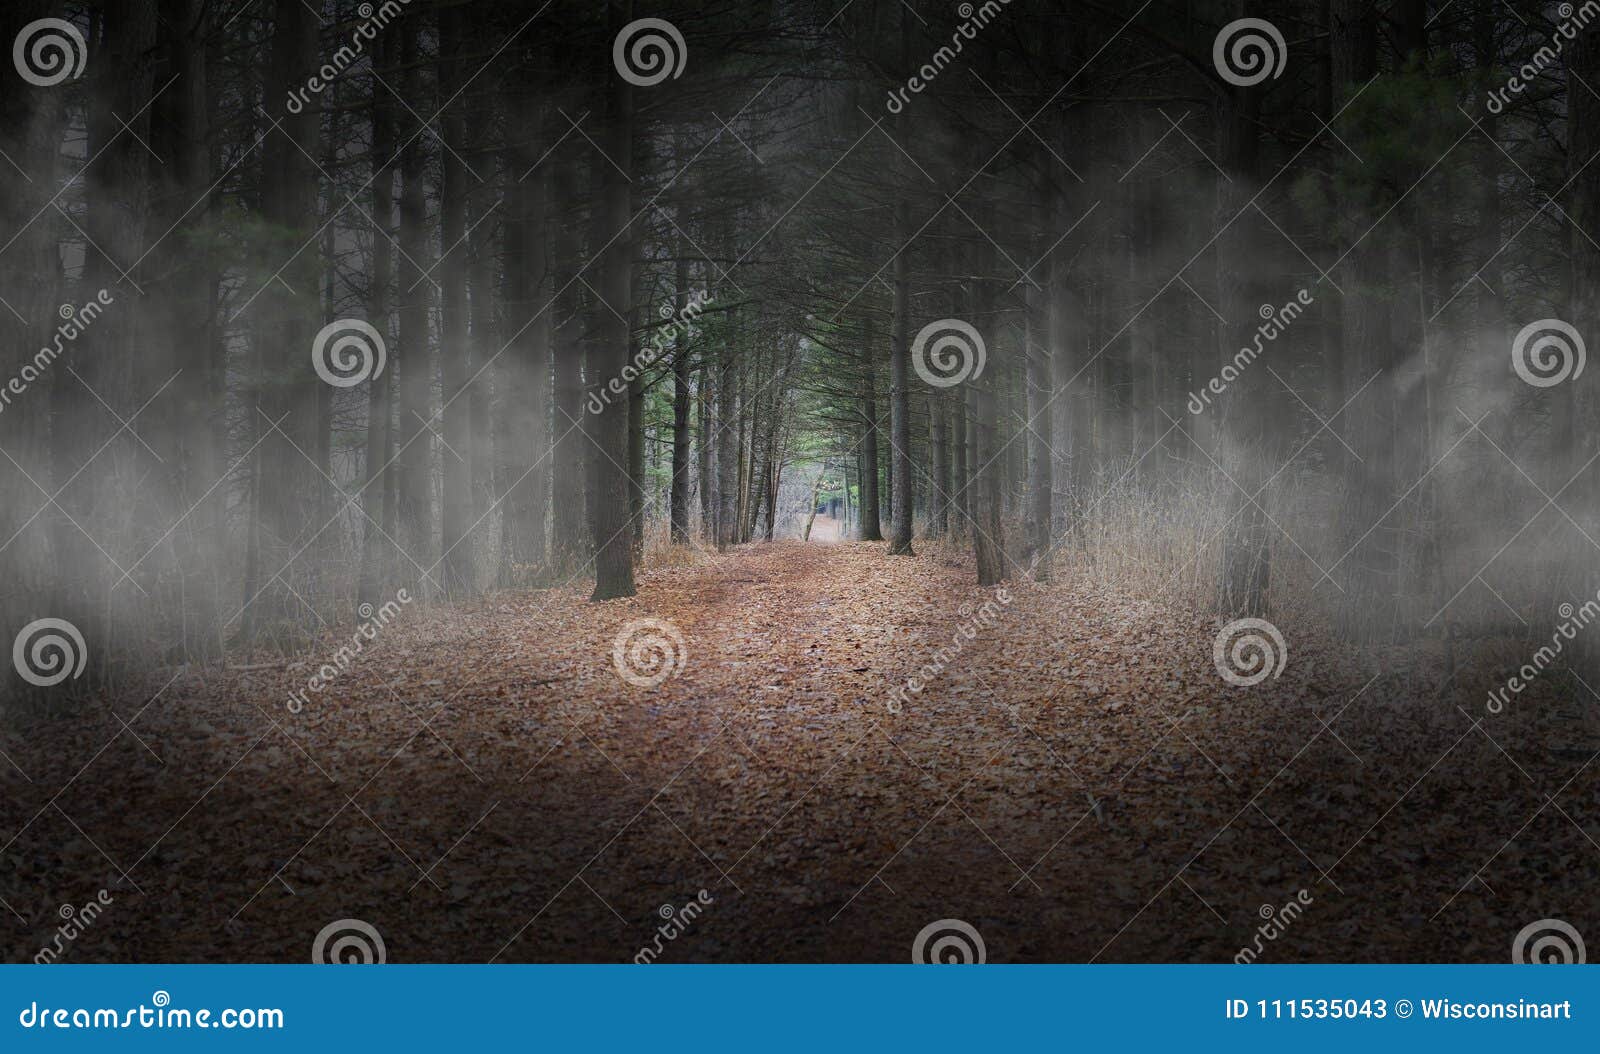 dark woods, forest, fog, background, surreal